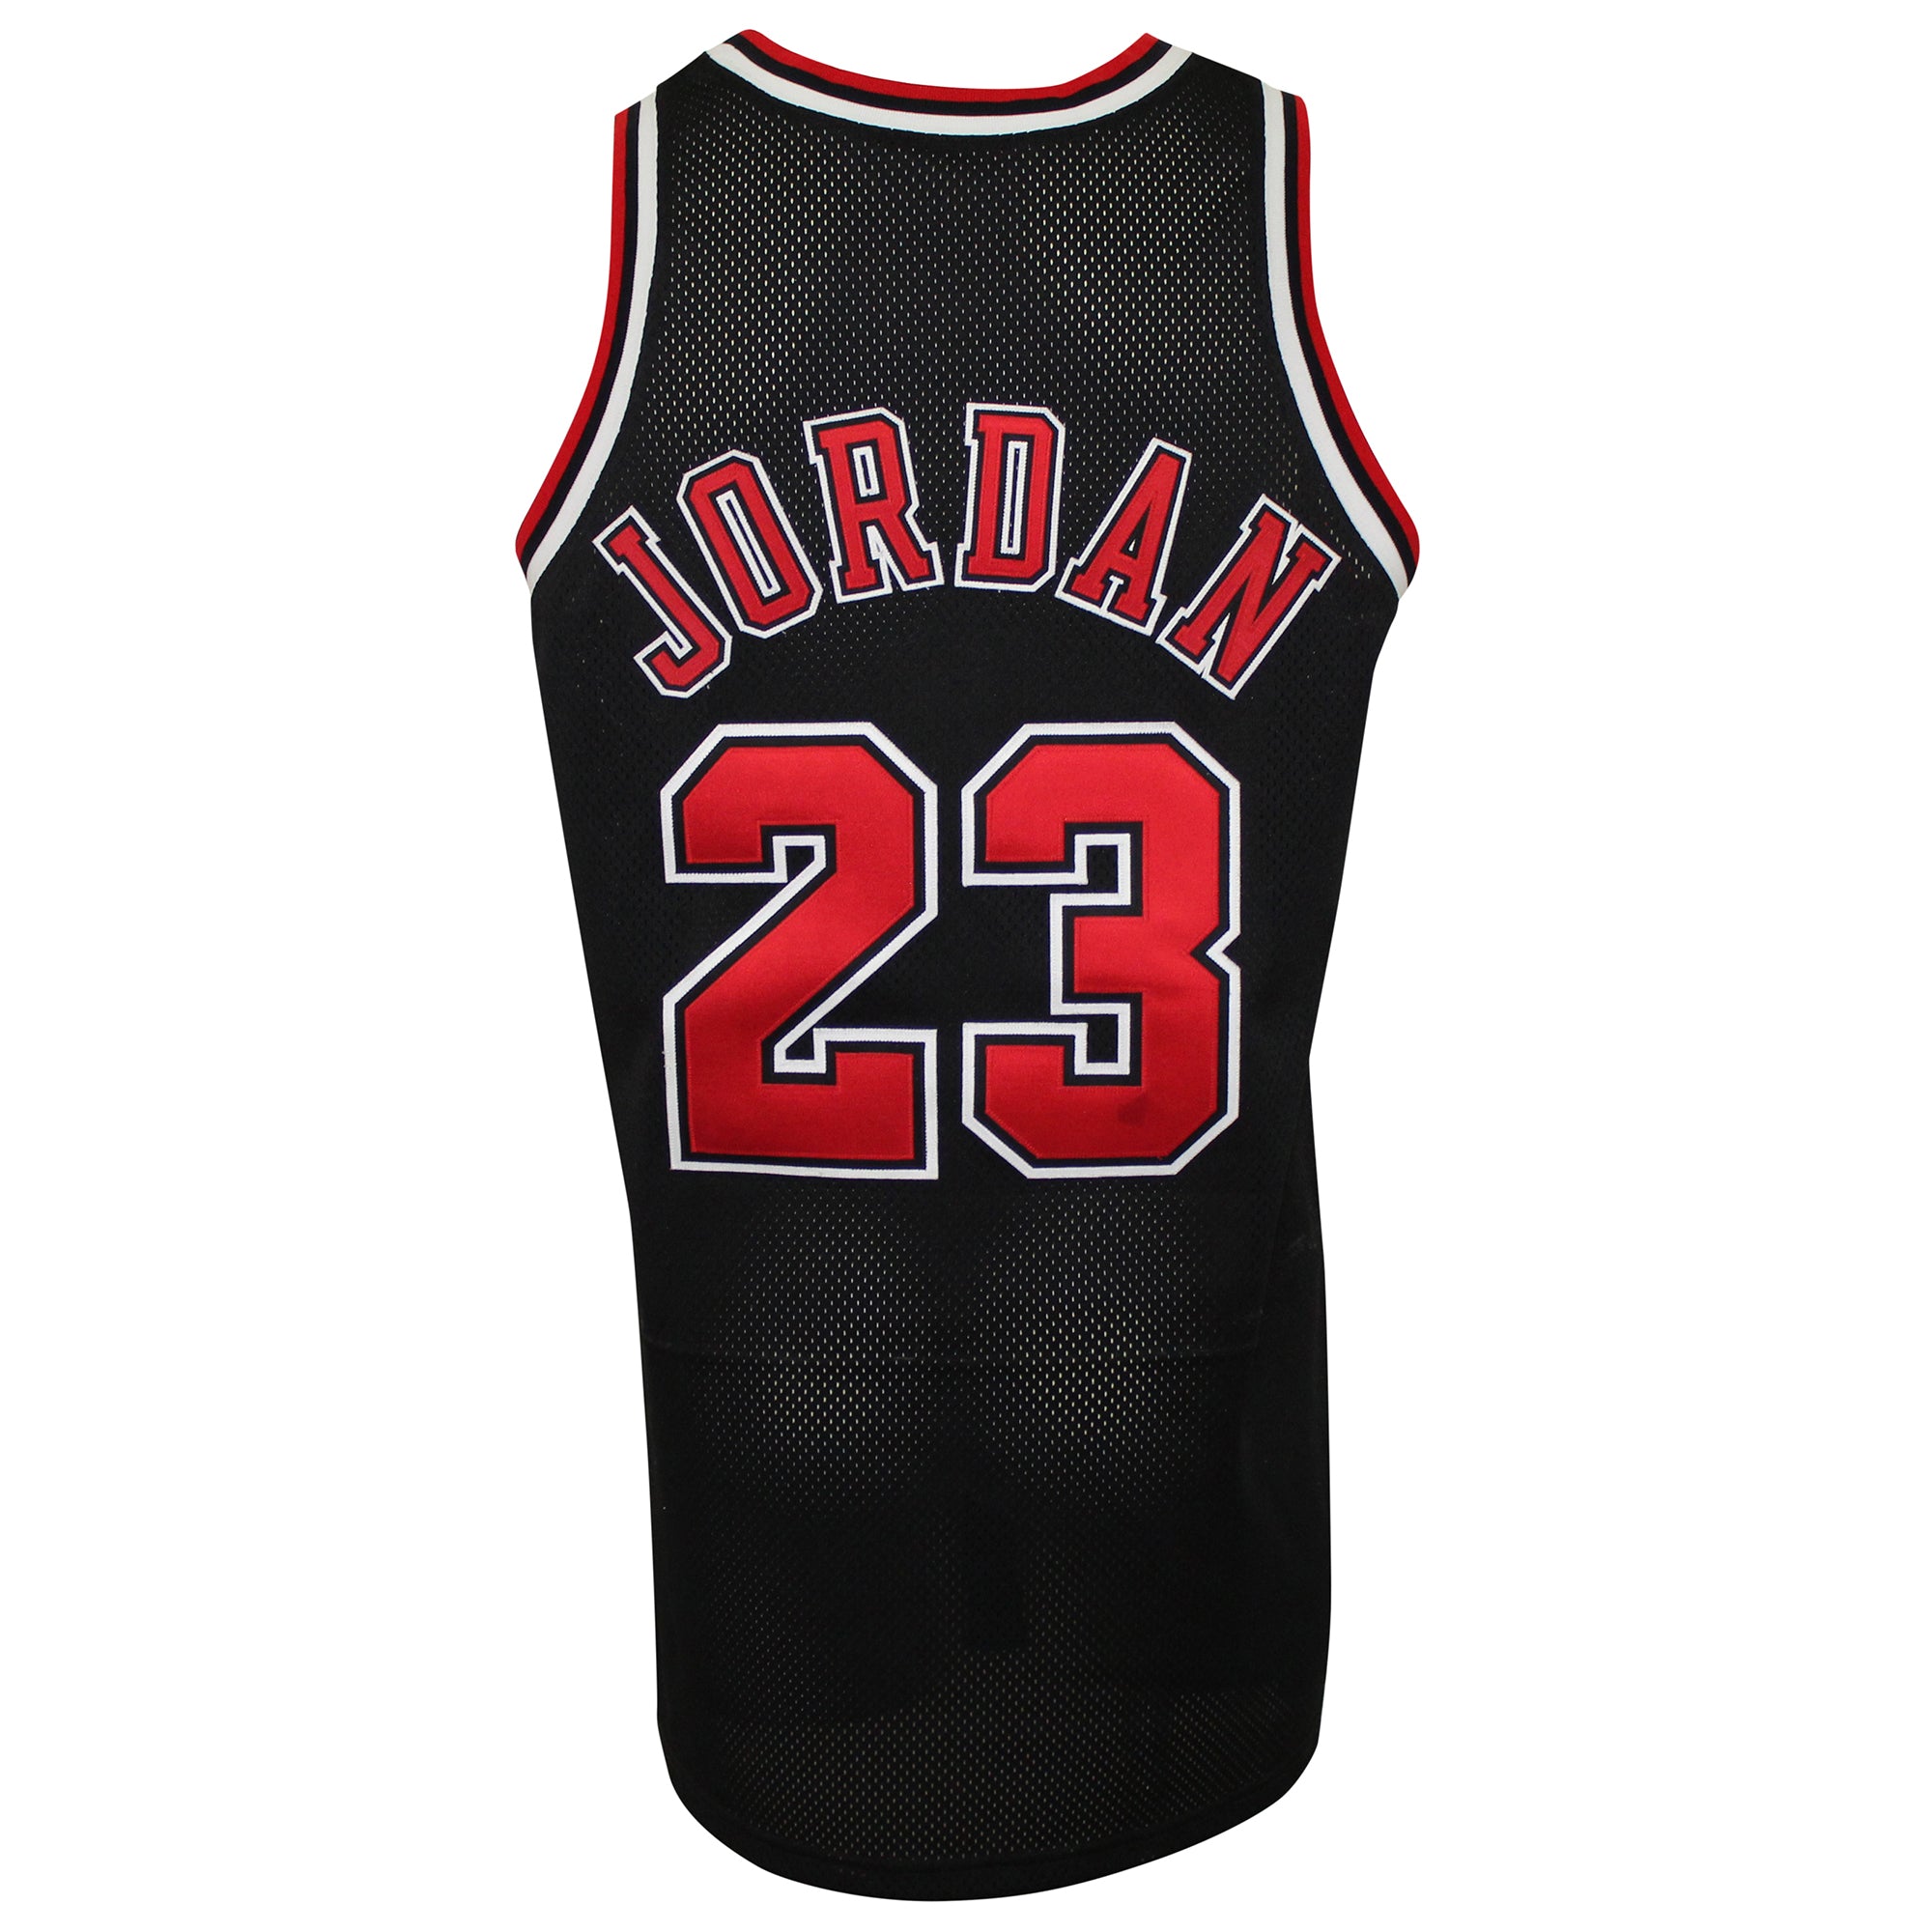 Michael Jordan 1997-98 Game Worn Uniform